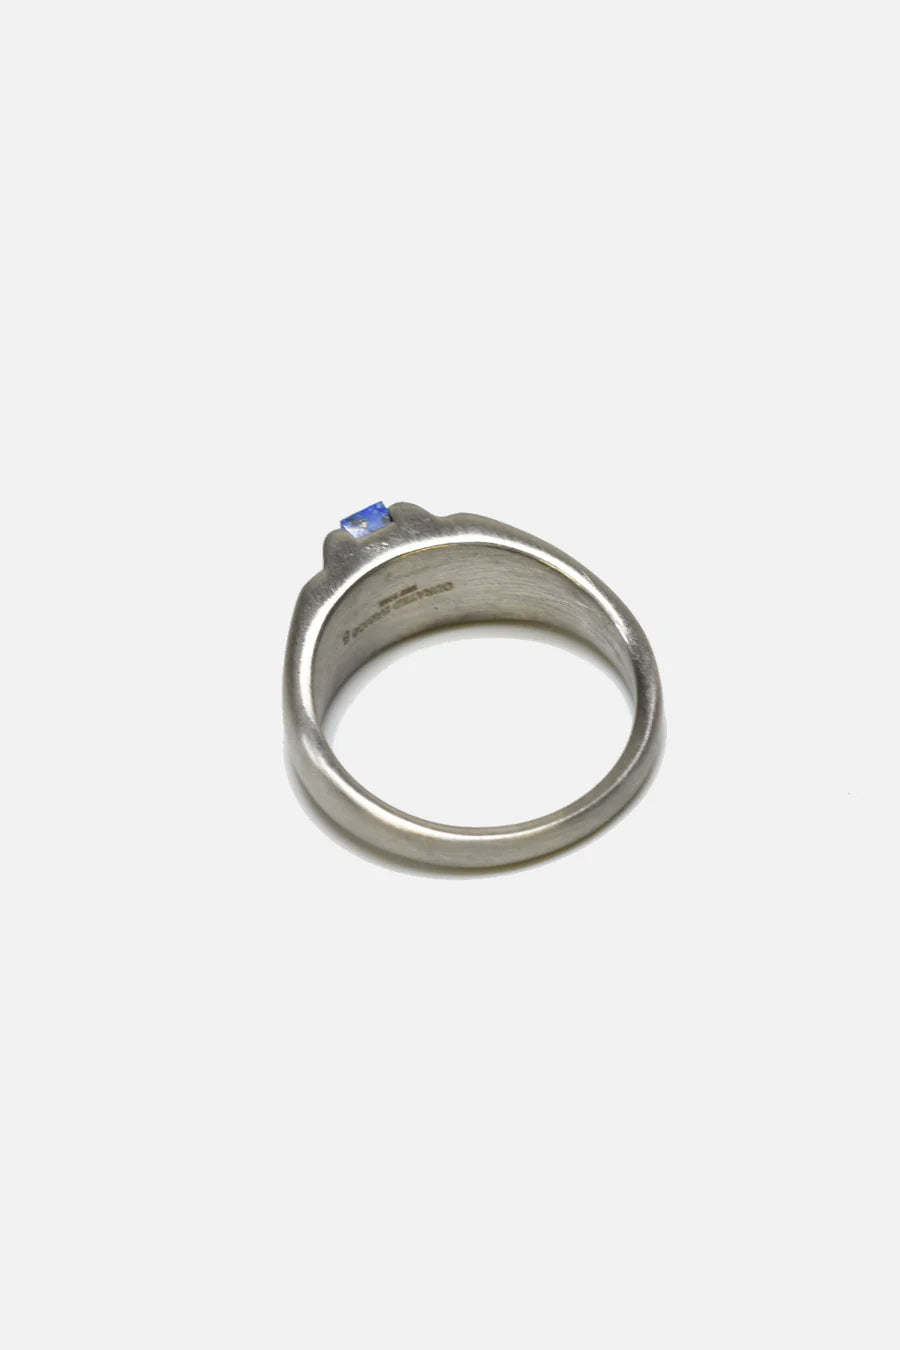 Curated Basics Lapis Lazuli Inlay Ring Jewelry Accessories stone 